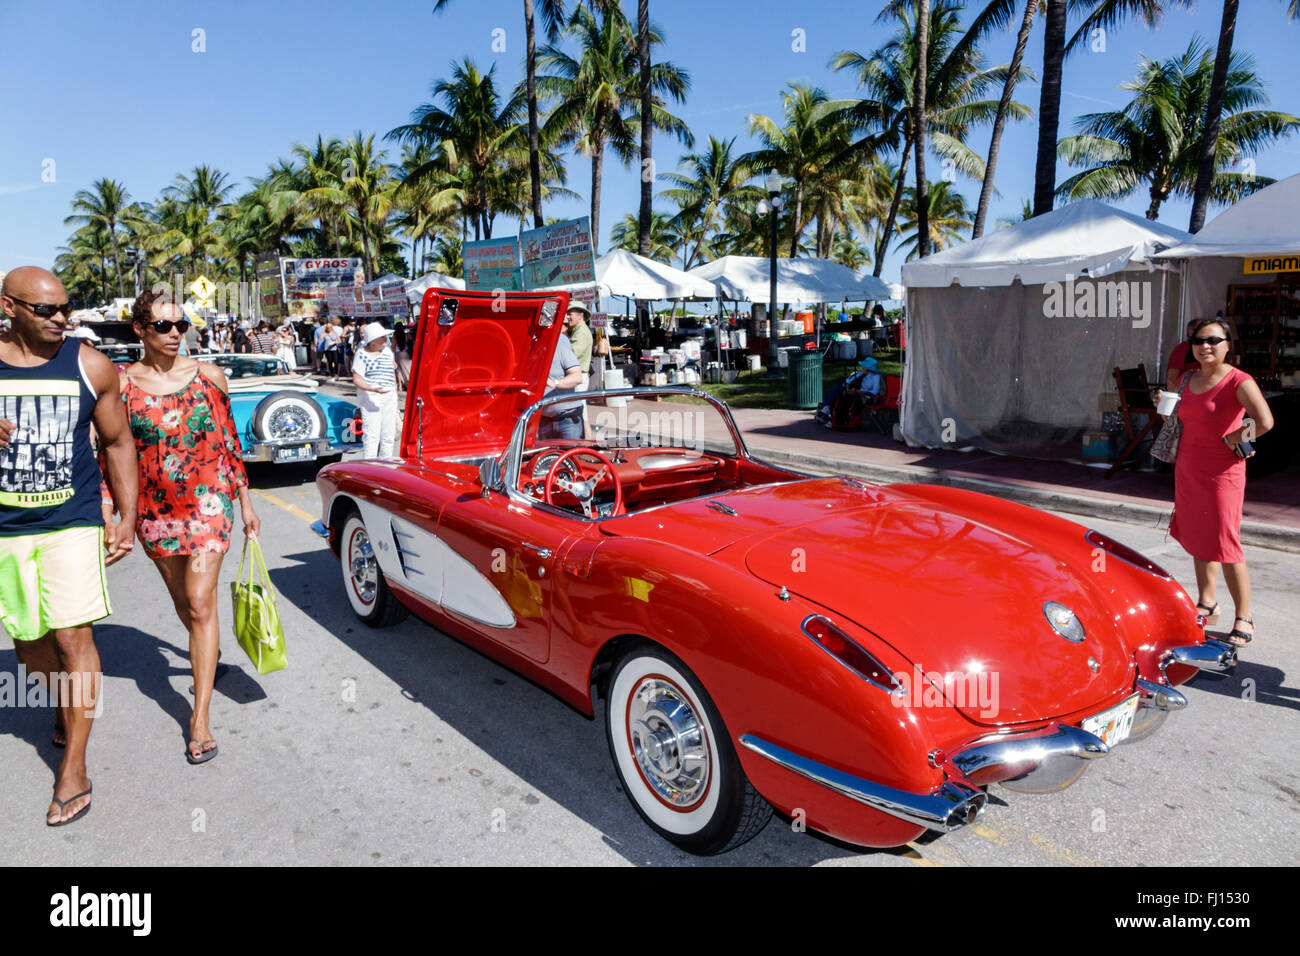 Florida,South,FL,Miami Beach,Ocean Drive,Art Deco Weekend,annual event,fair,festival,Chevy Chevrolet Corvette,red,convertible,classic,antique,car cars Stock Photo